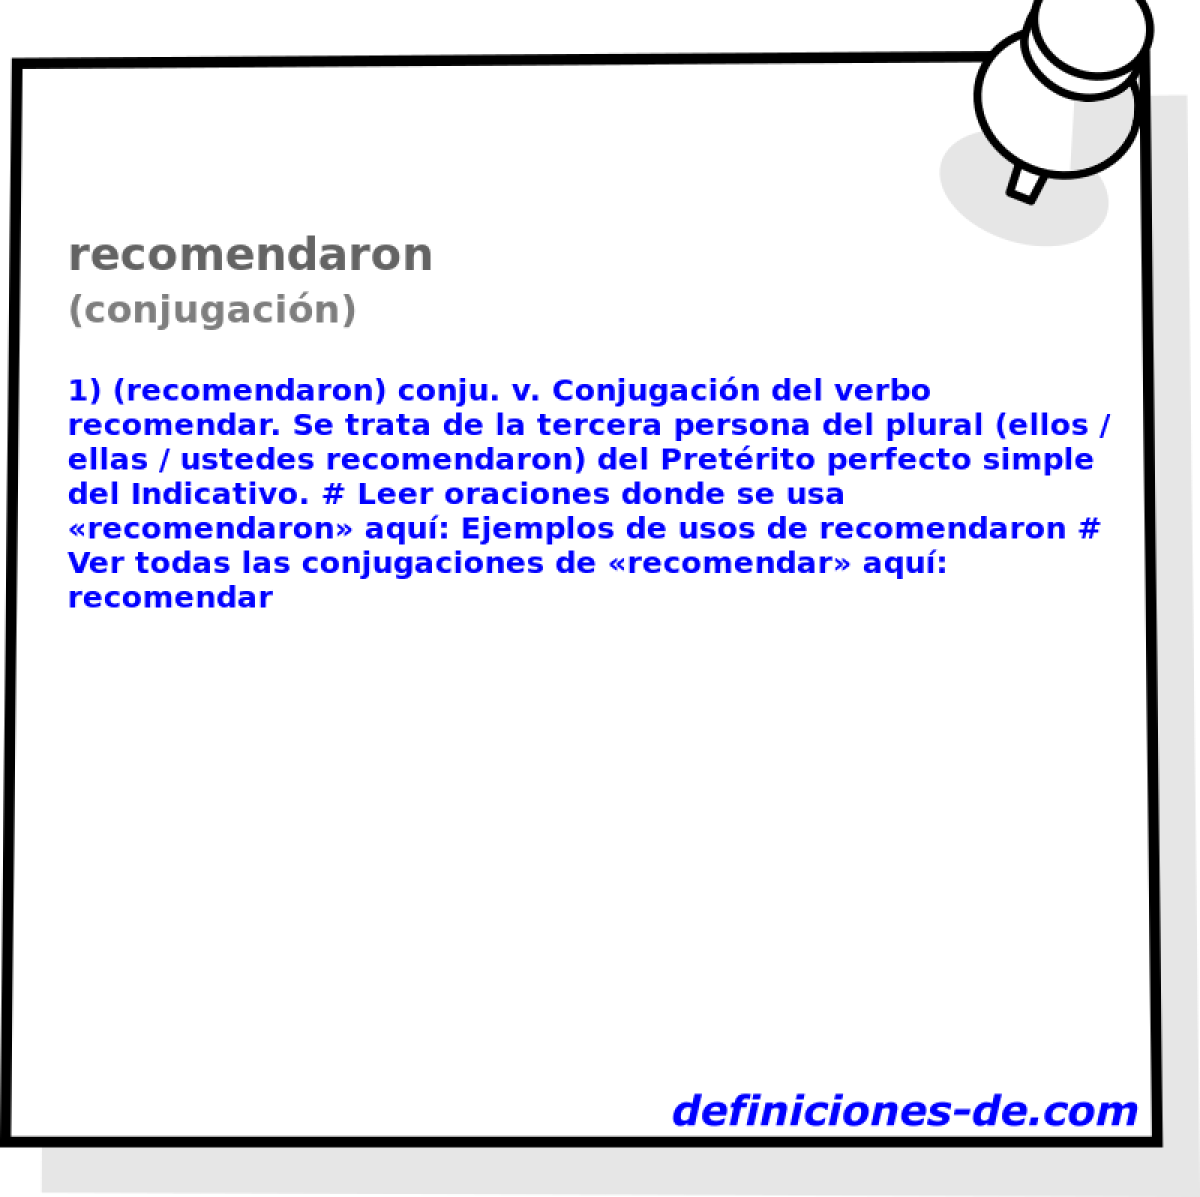 recomendaron (conjugacin)